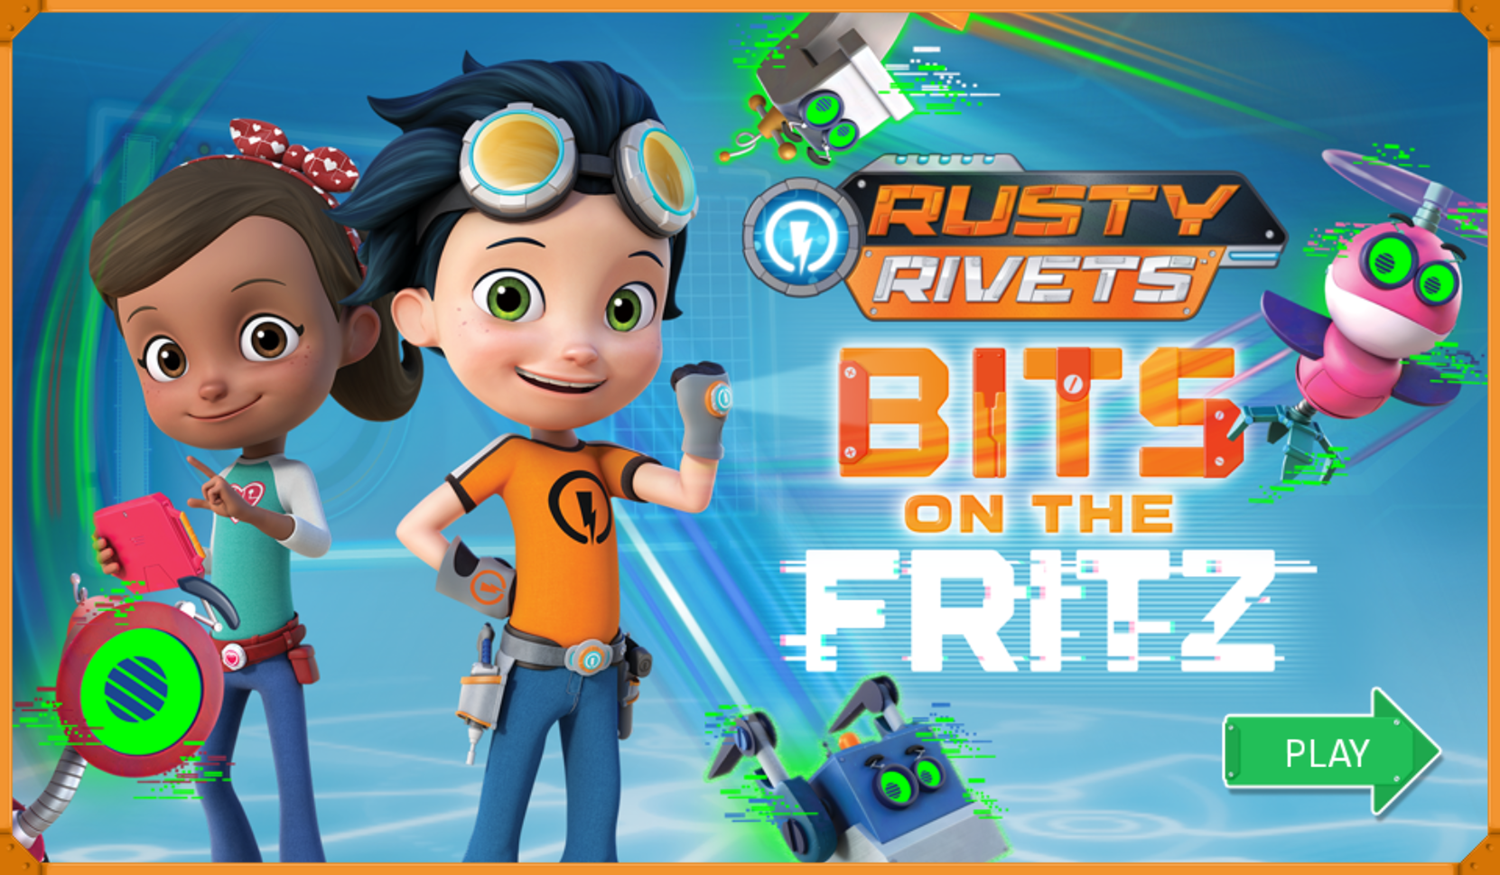 Rusty Rivets Bits on the Fritz Game Welcome Screen Screenshot.